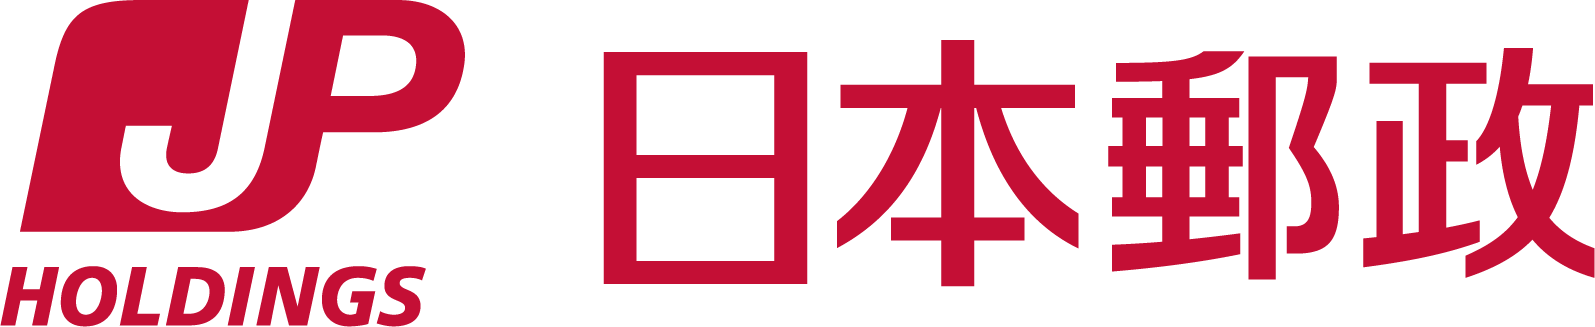 Japan Post Holdings Logo png